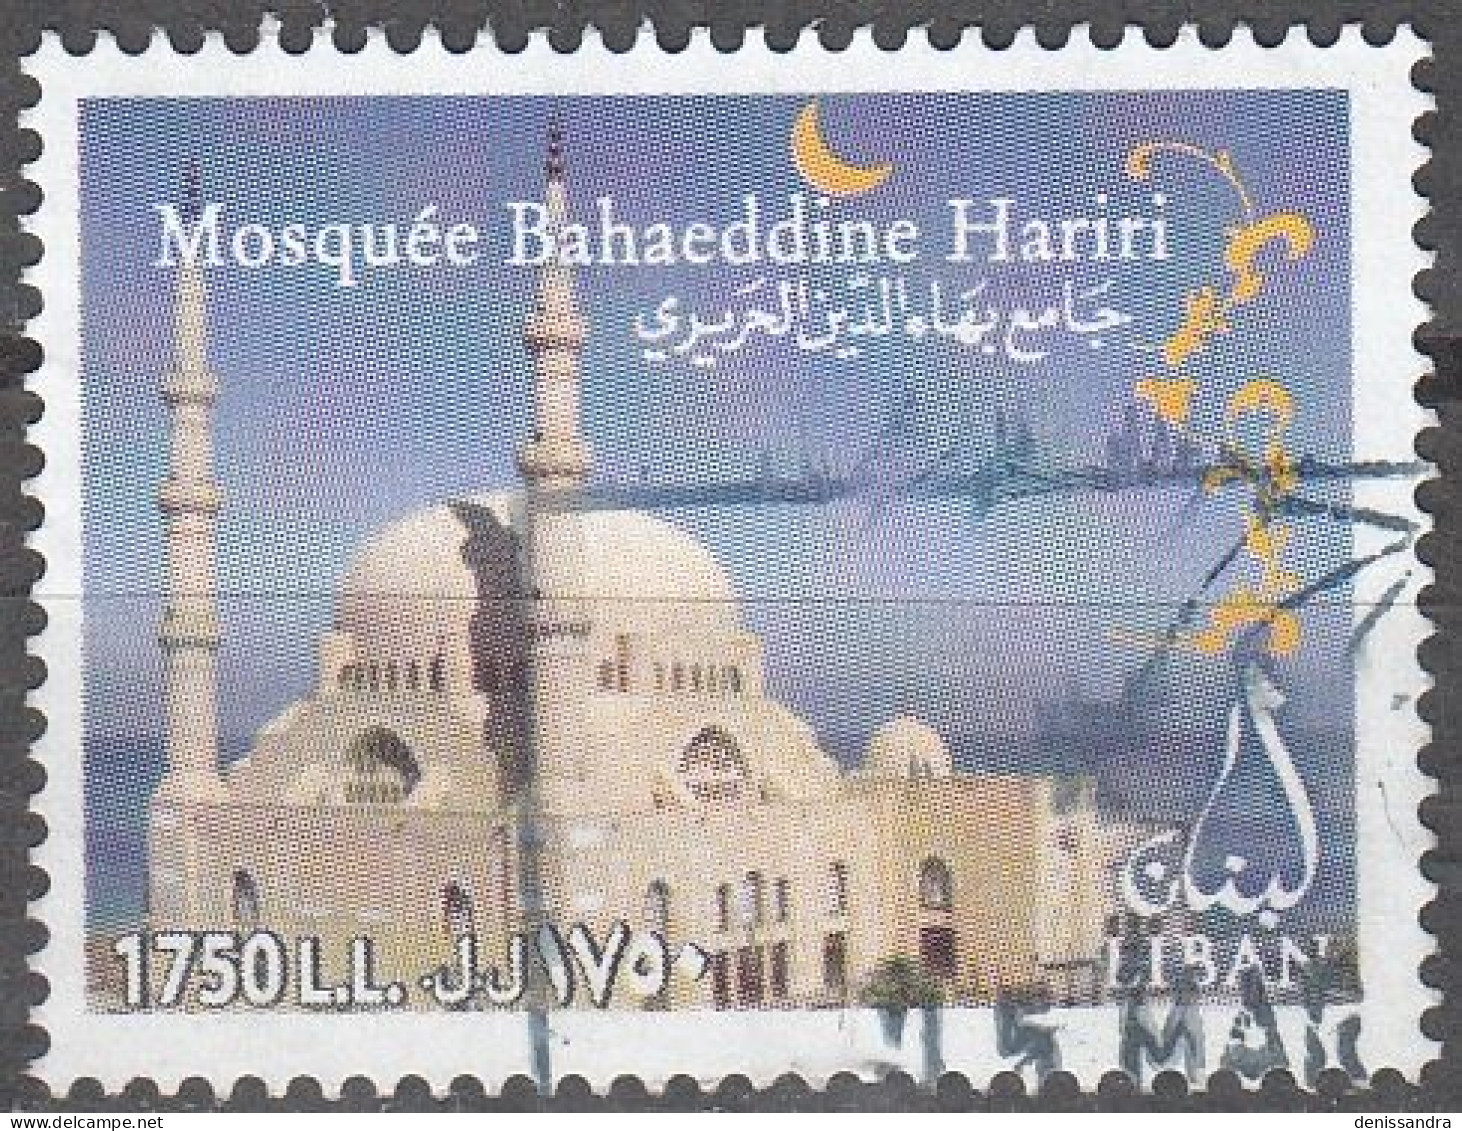 Liban 2005 Michel 1465 O Cote (2007) 3.50 € Mosquée Bahaeddine Hariri Cachet Rond - Libanon